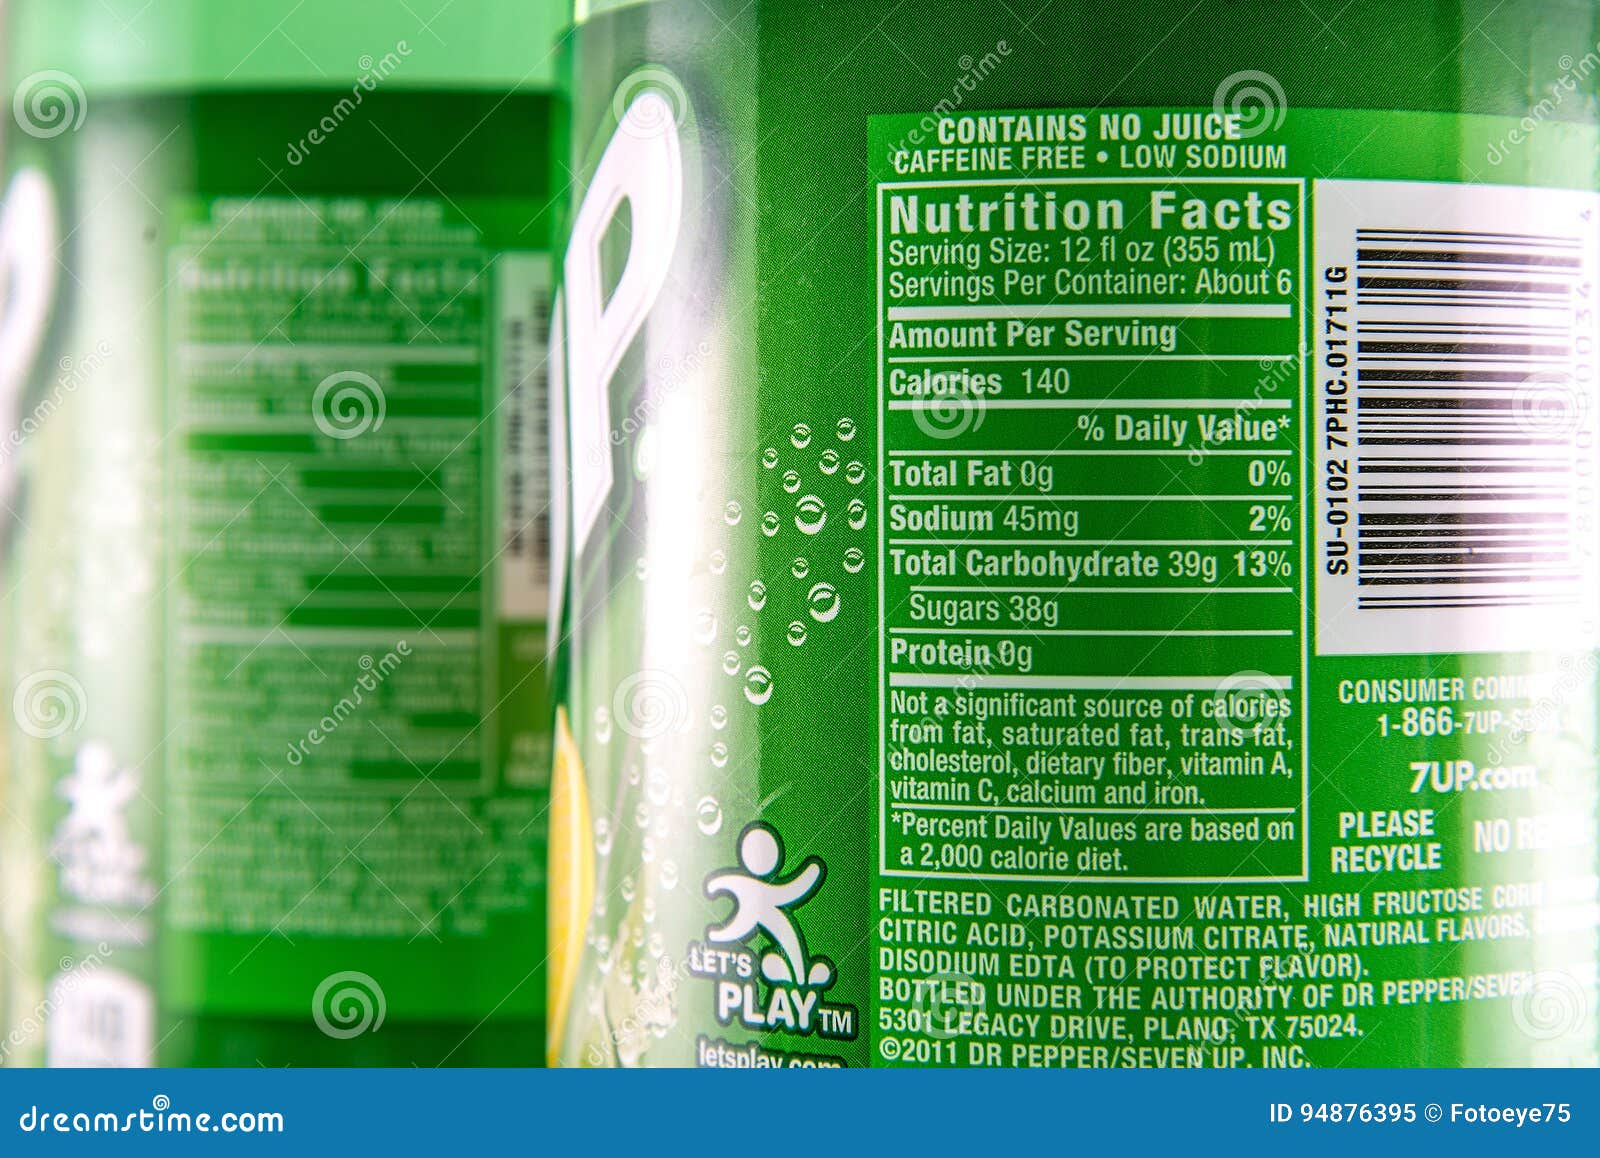 33 Diet 7up Nutrition Label - Labels Information List